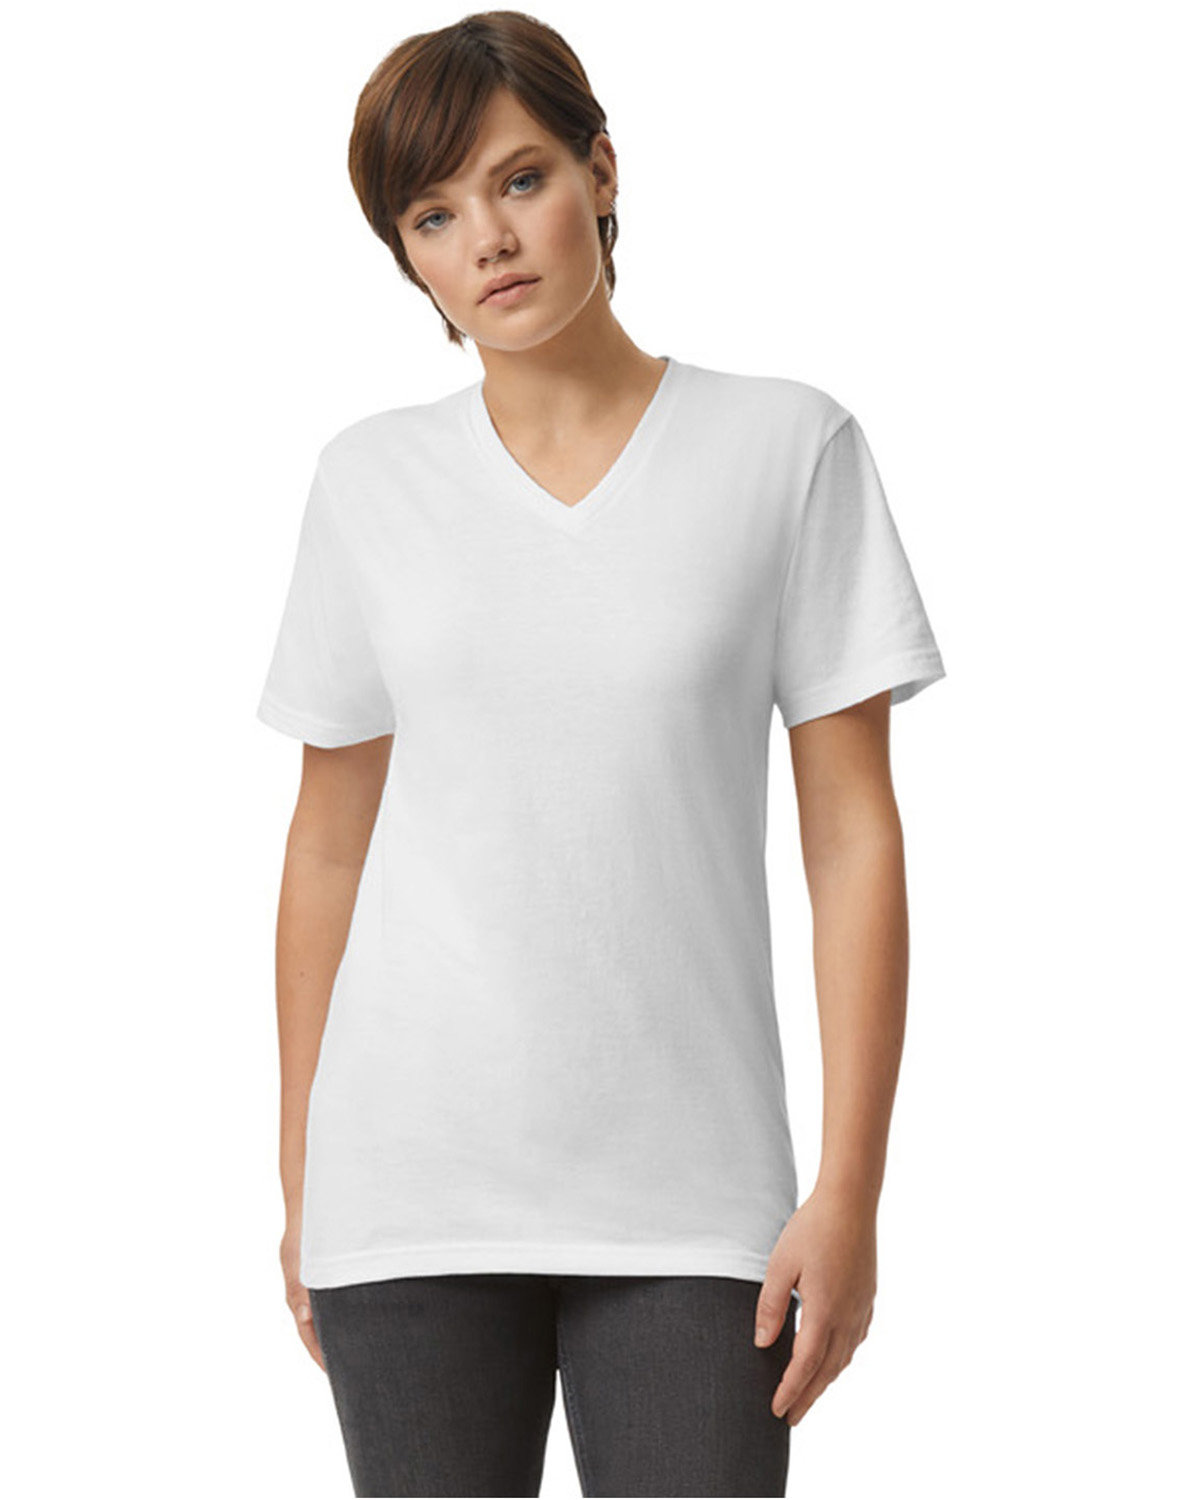 American Apparel Unisex CVC V-Neck T-Shirt WHITE 